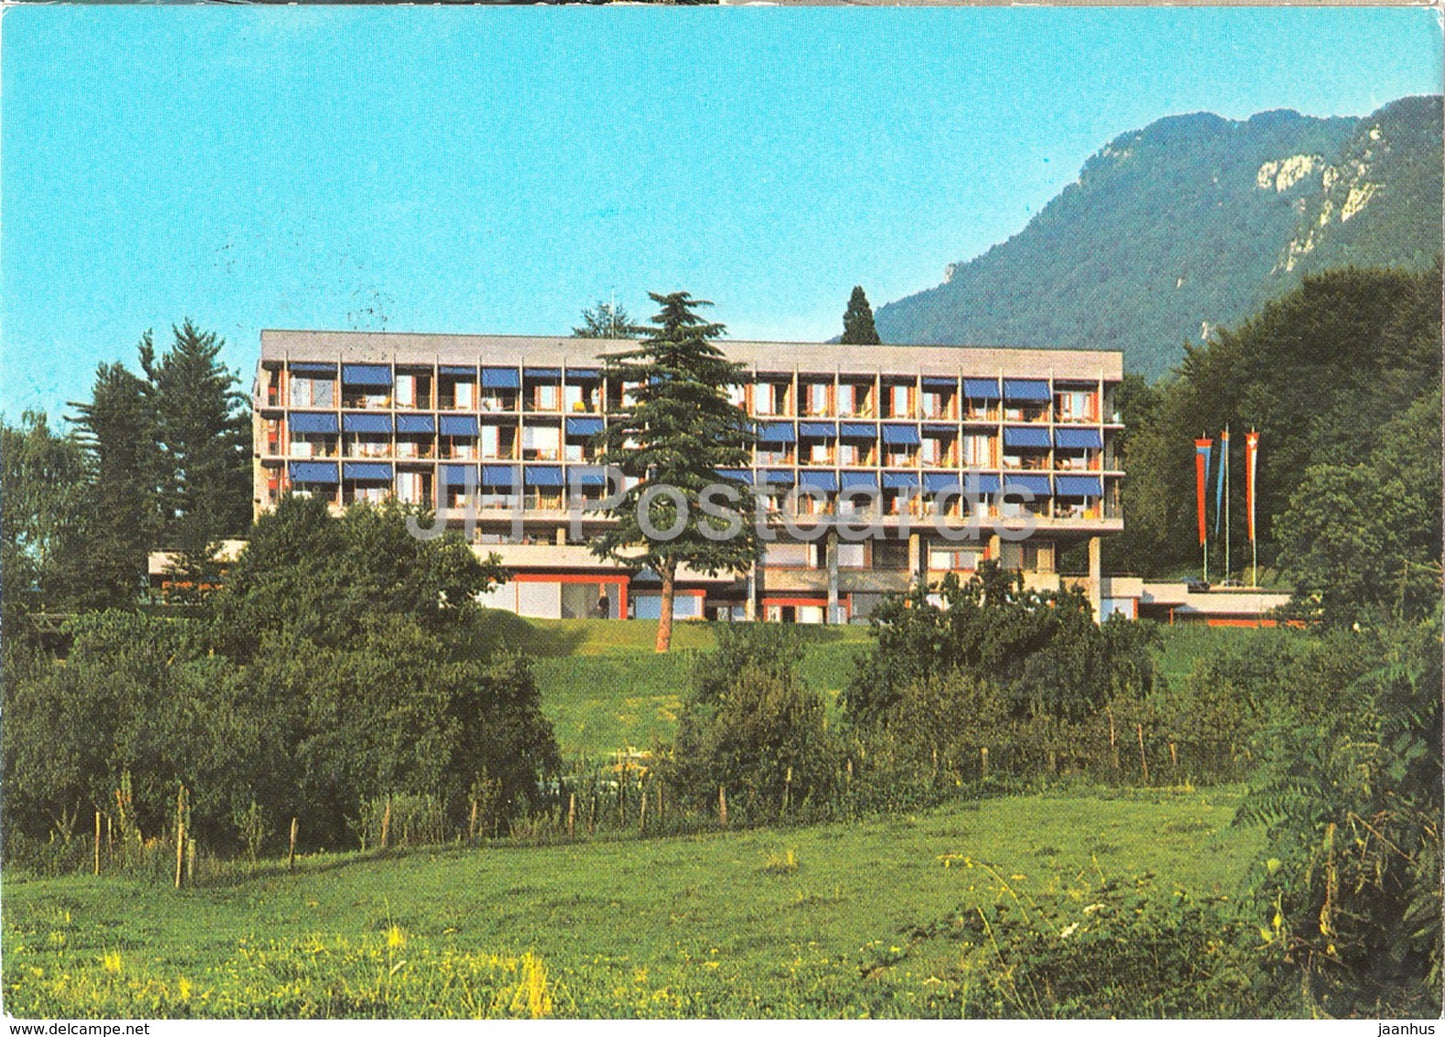 Kurhotel Serpiano - hotel - 3477 - 1977 - Switzerland - used - JH Postcards